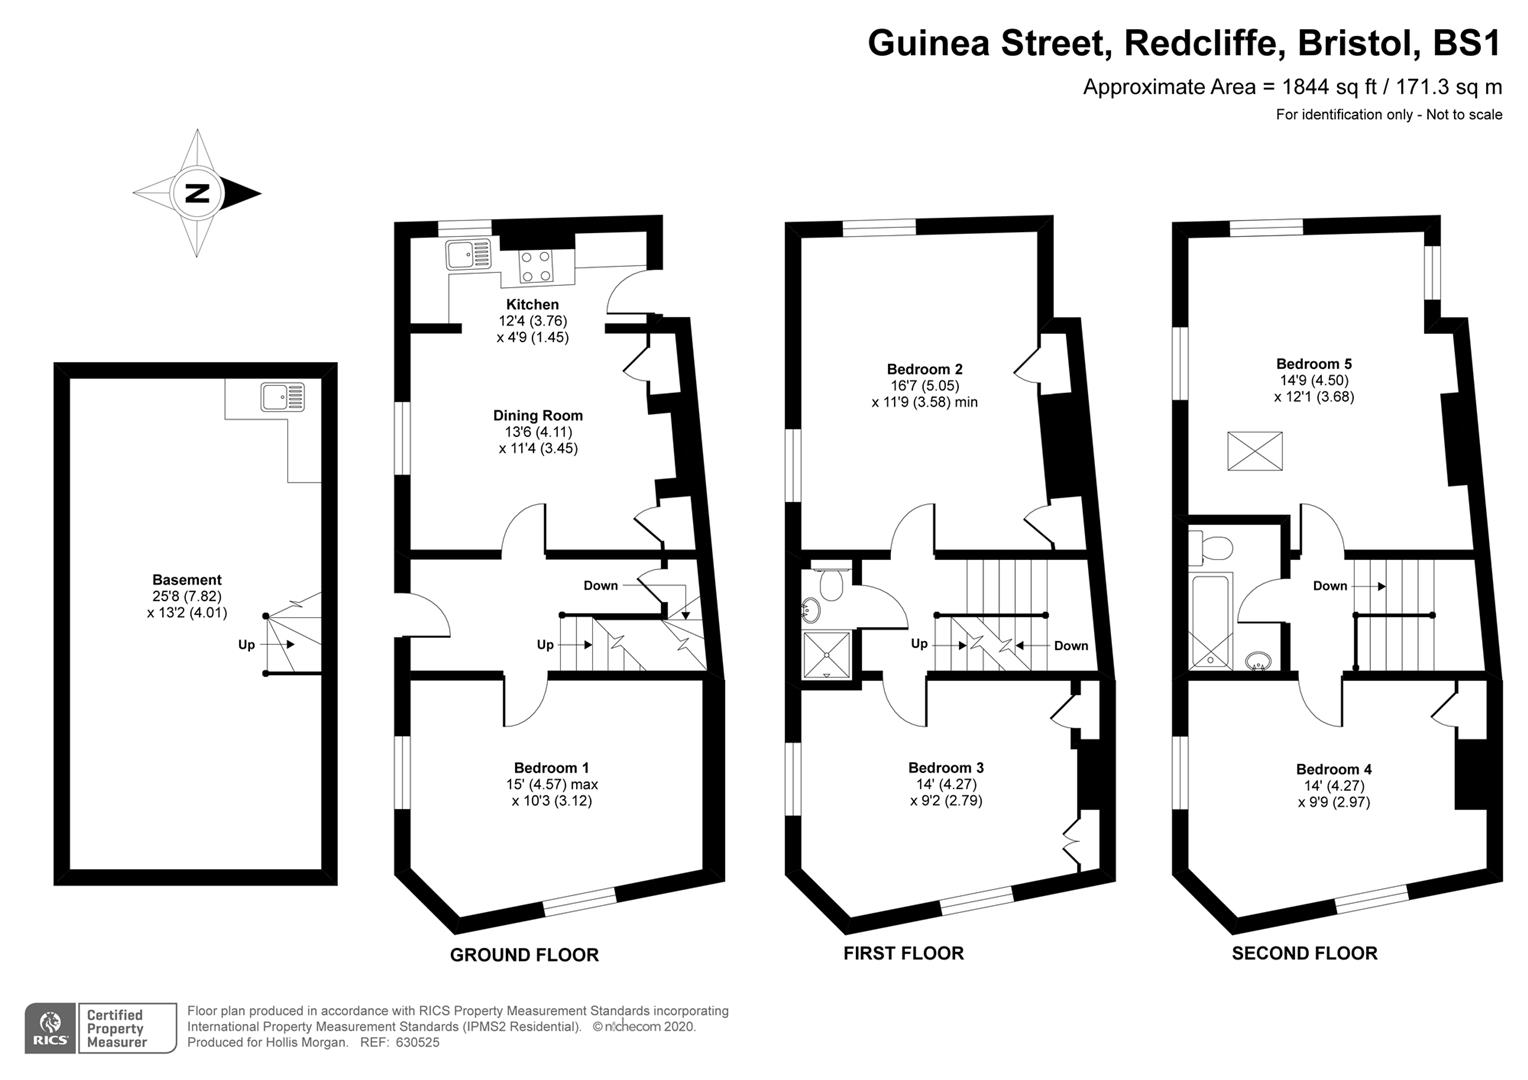 Floorplans For Guinea Street, Redcliffe